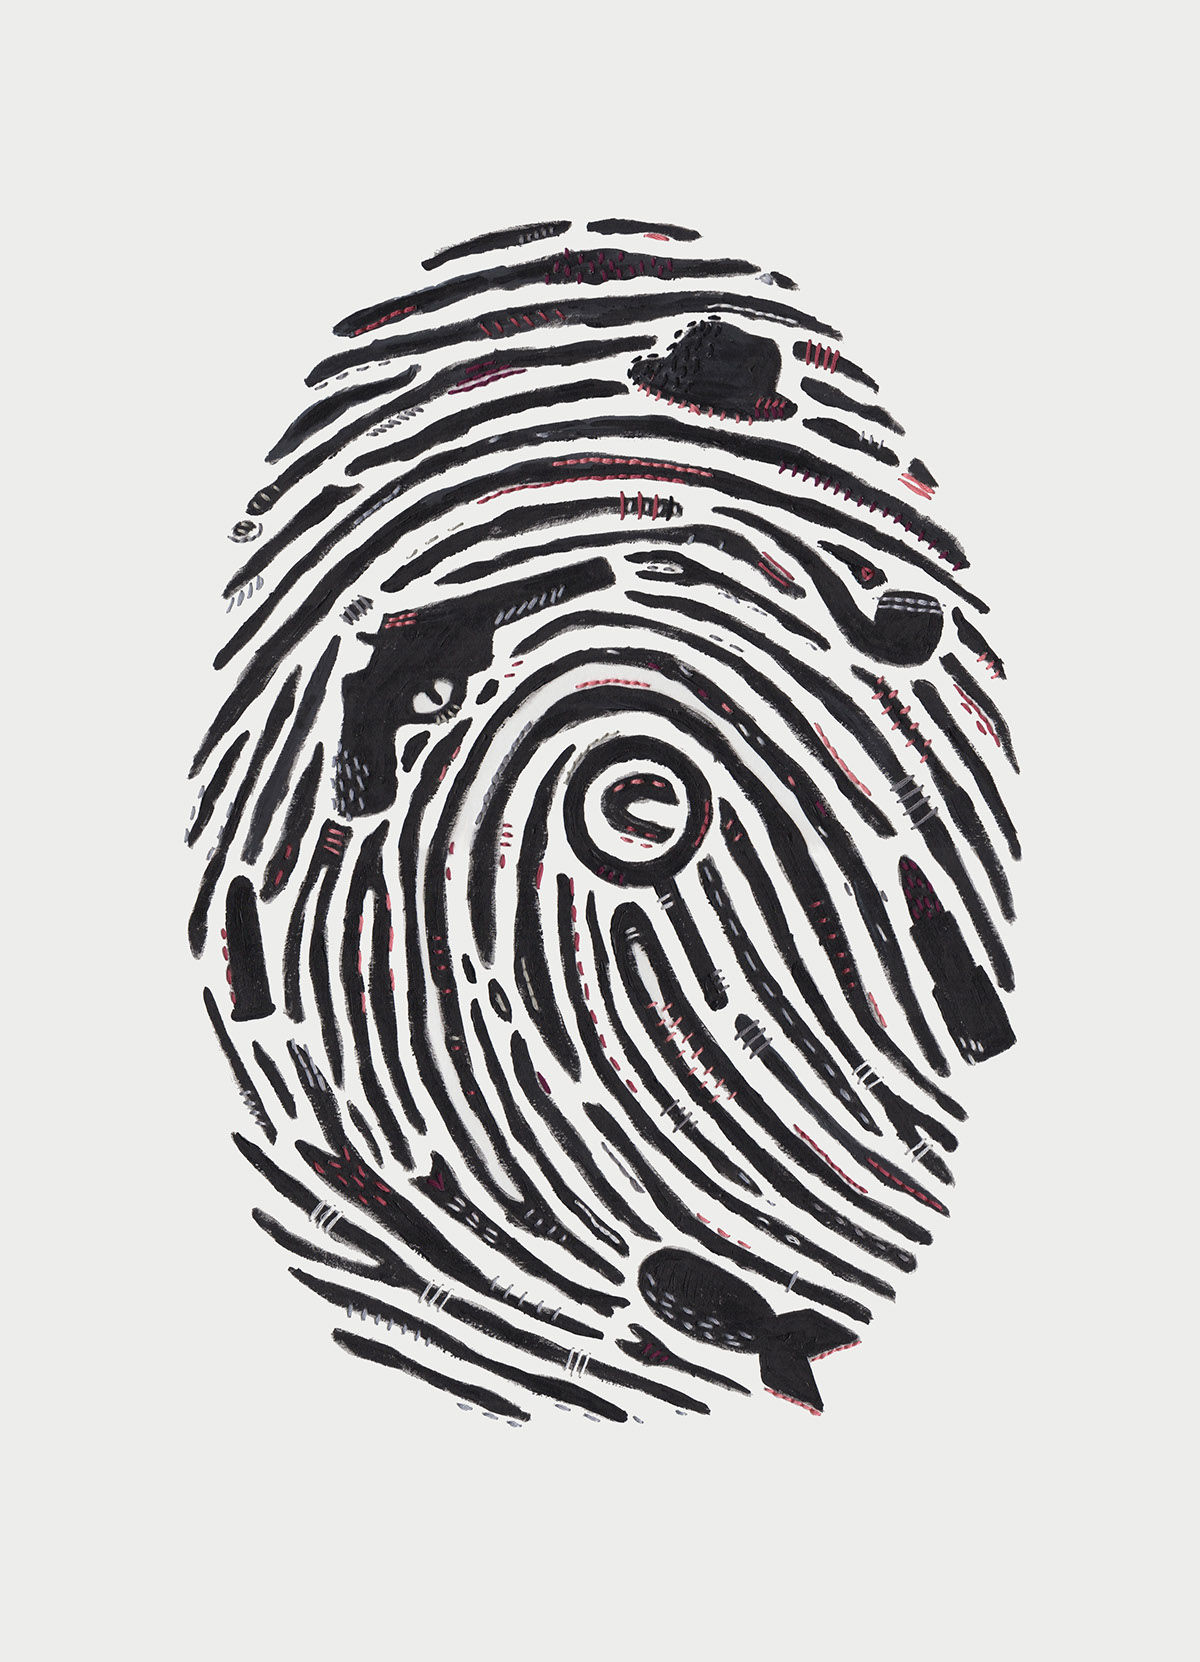 acrylic Embroidery stitch craft fingerprint Gun bomb detective poster film poster design